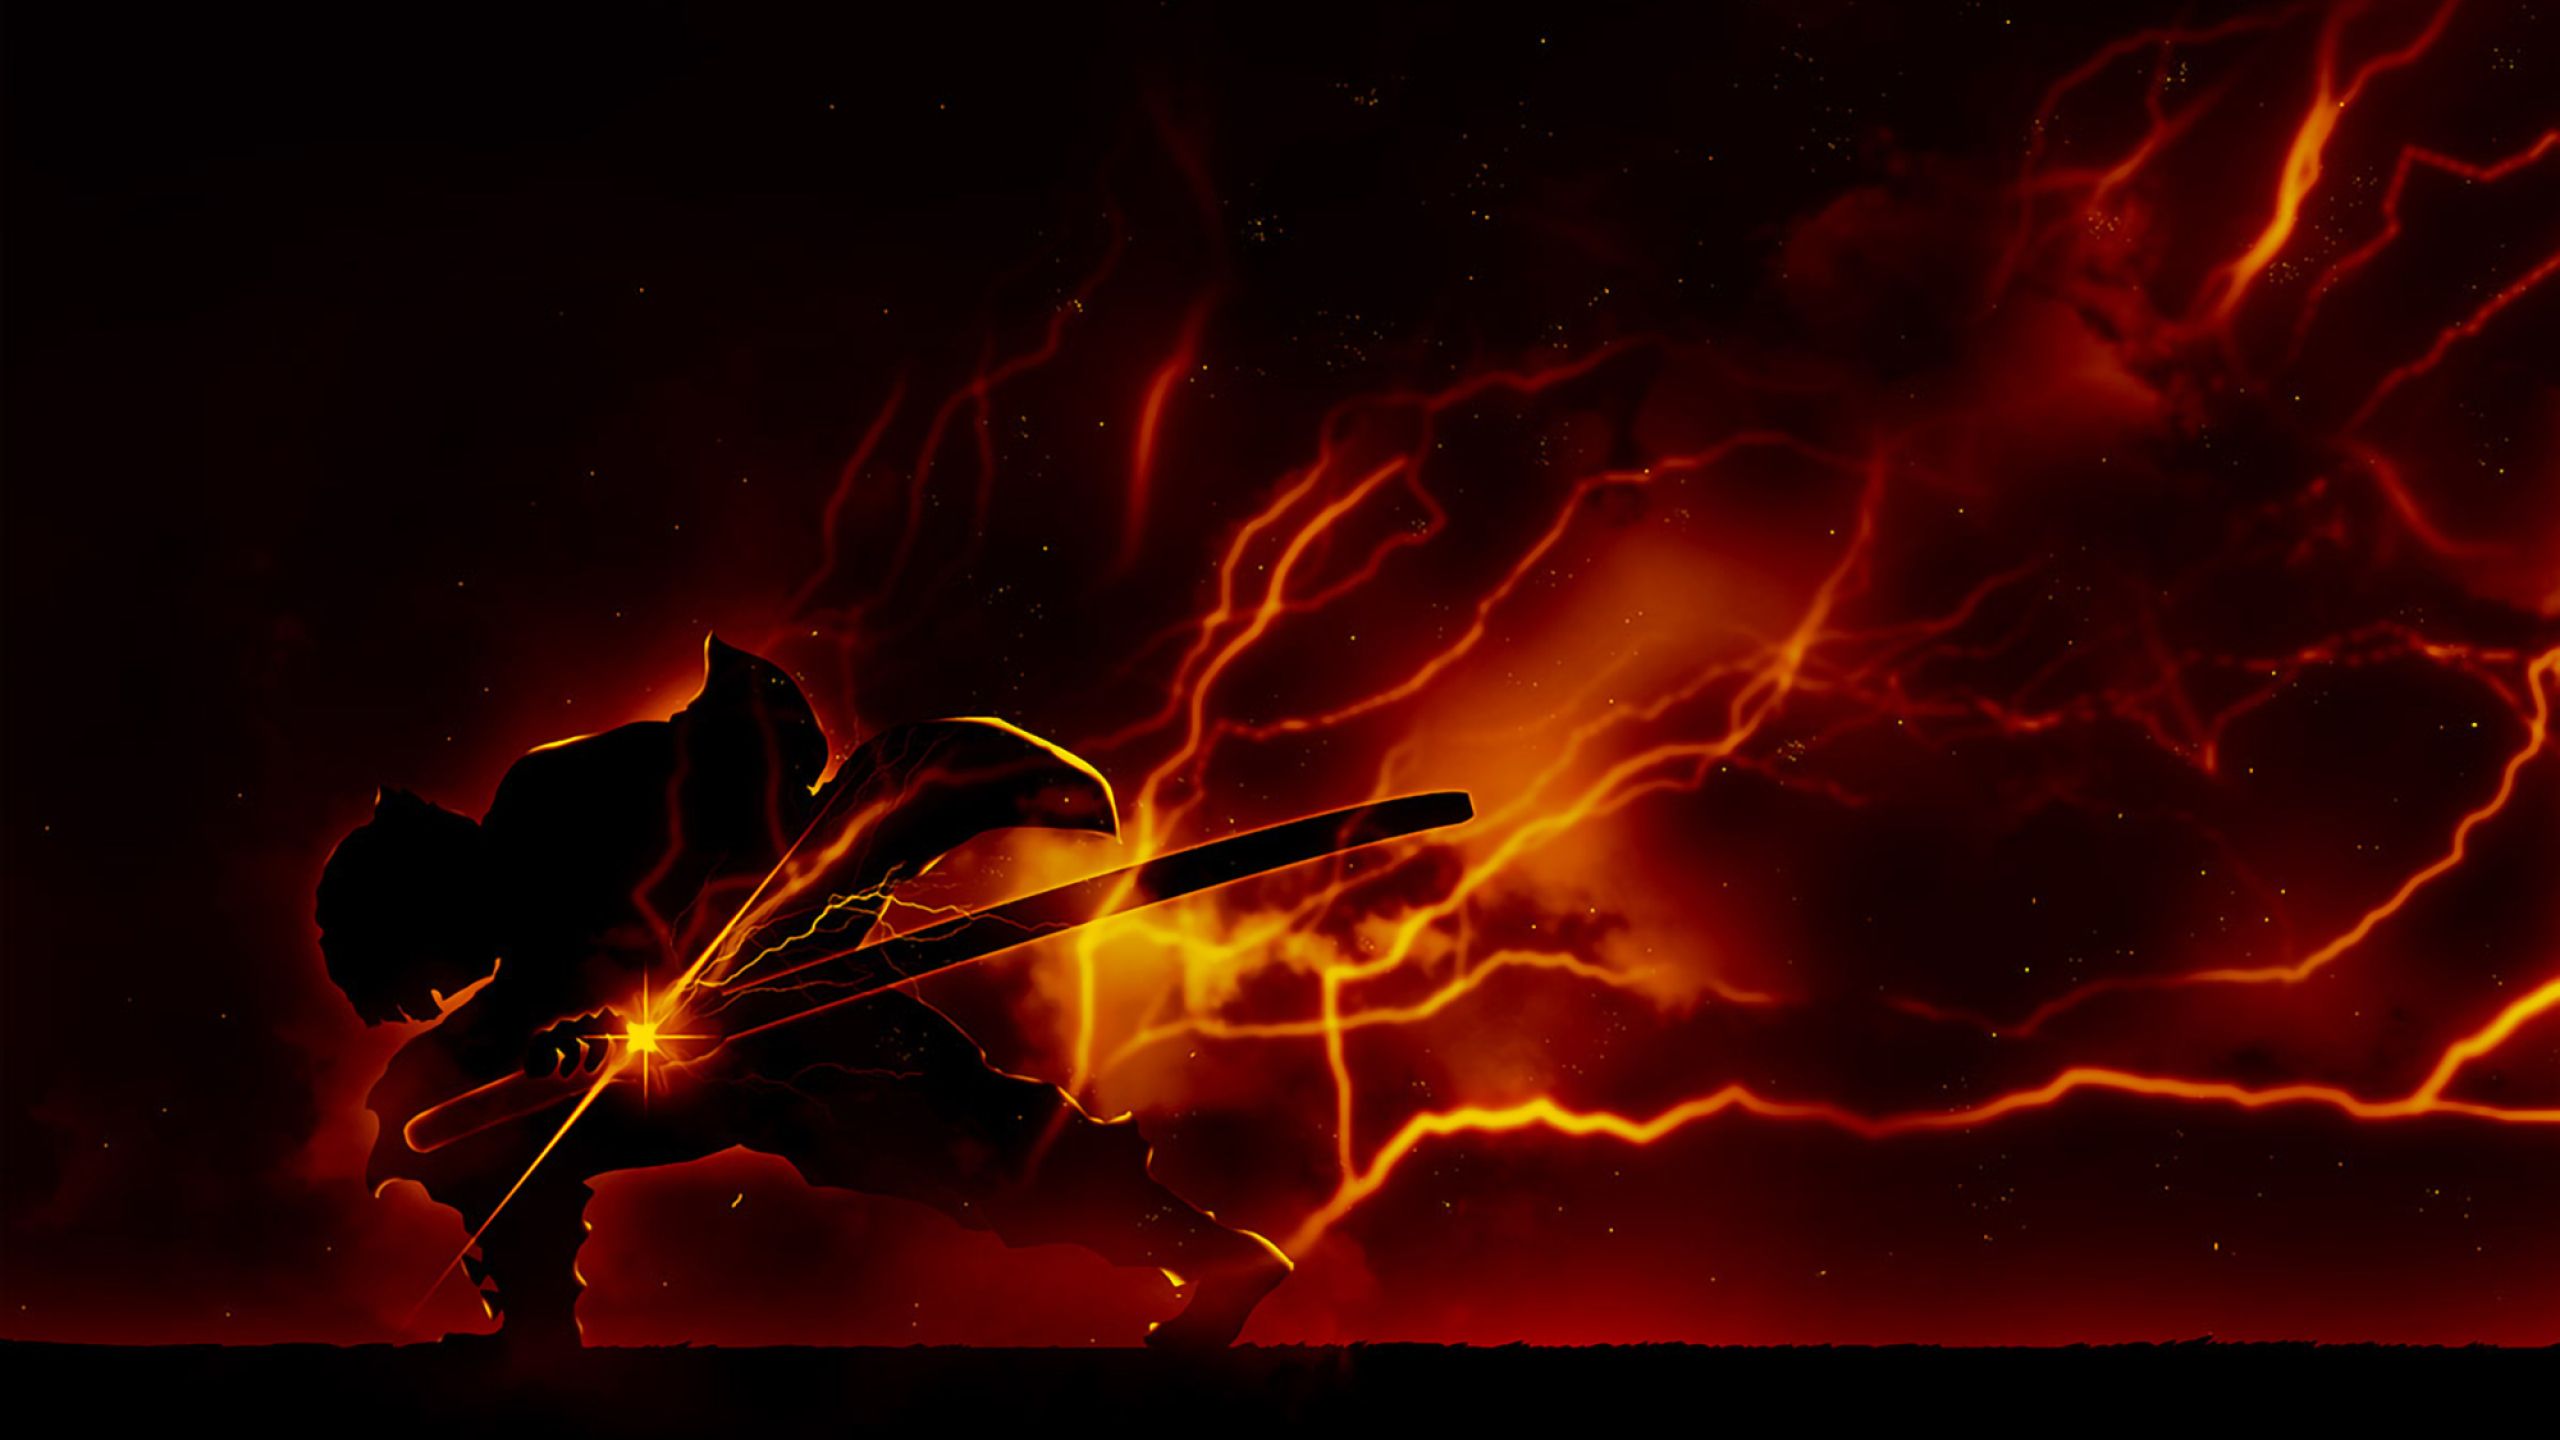 Zenitsu Agatsuma Demon Slayer 1440P Resolution Wallpaper, HD Anime 4K Wallpaper, Image, Photo and Background